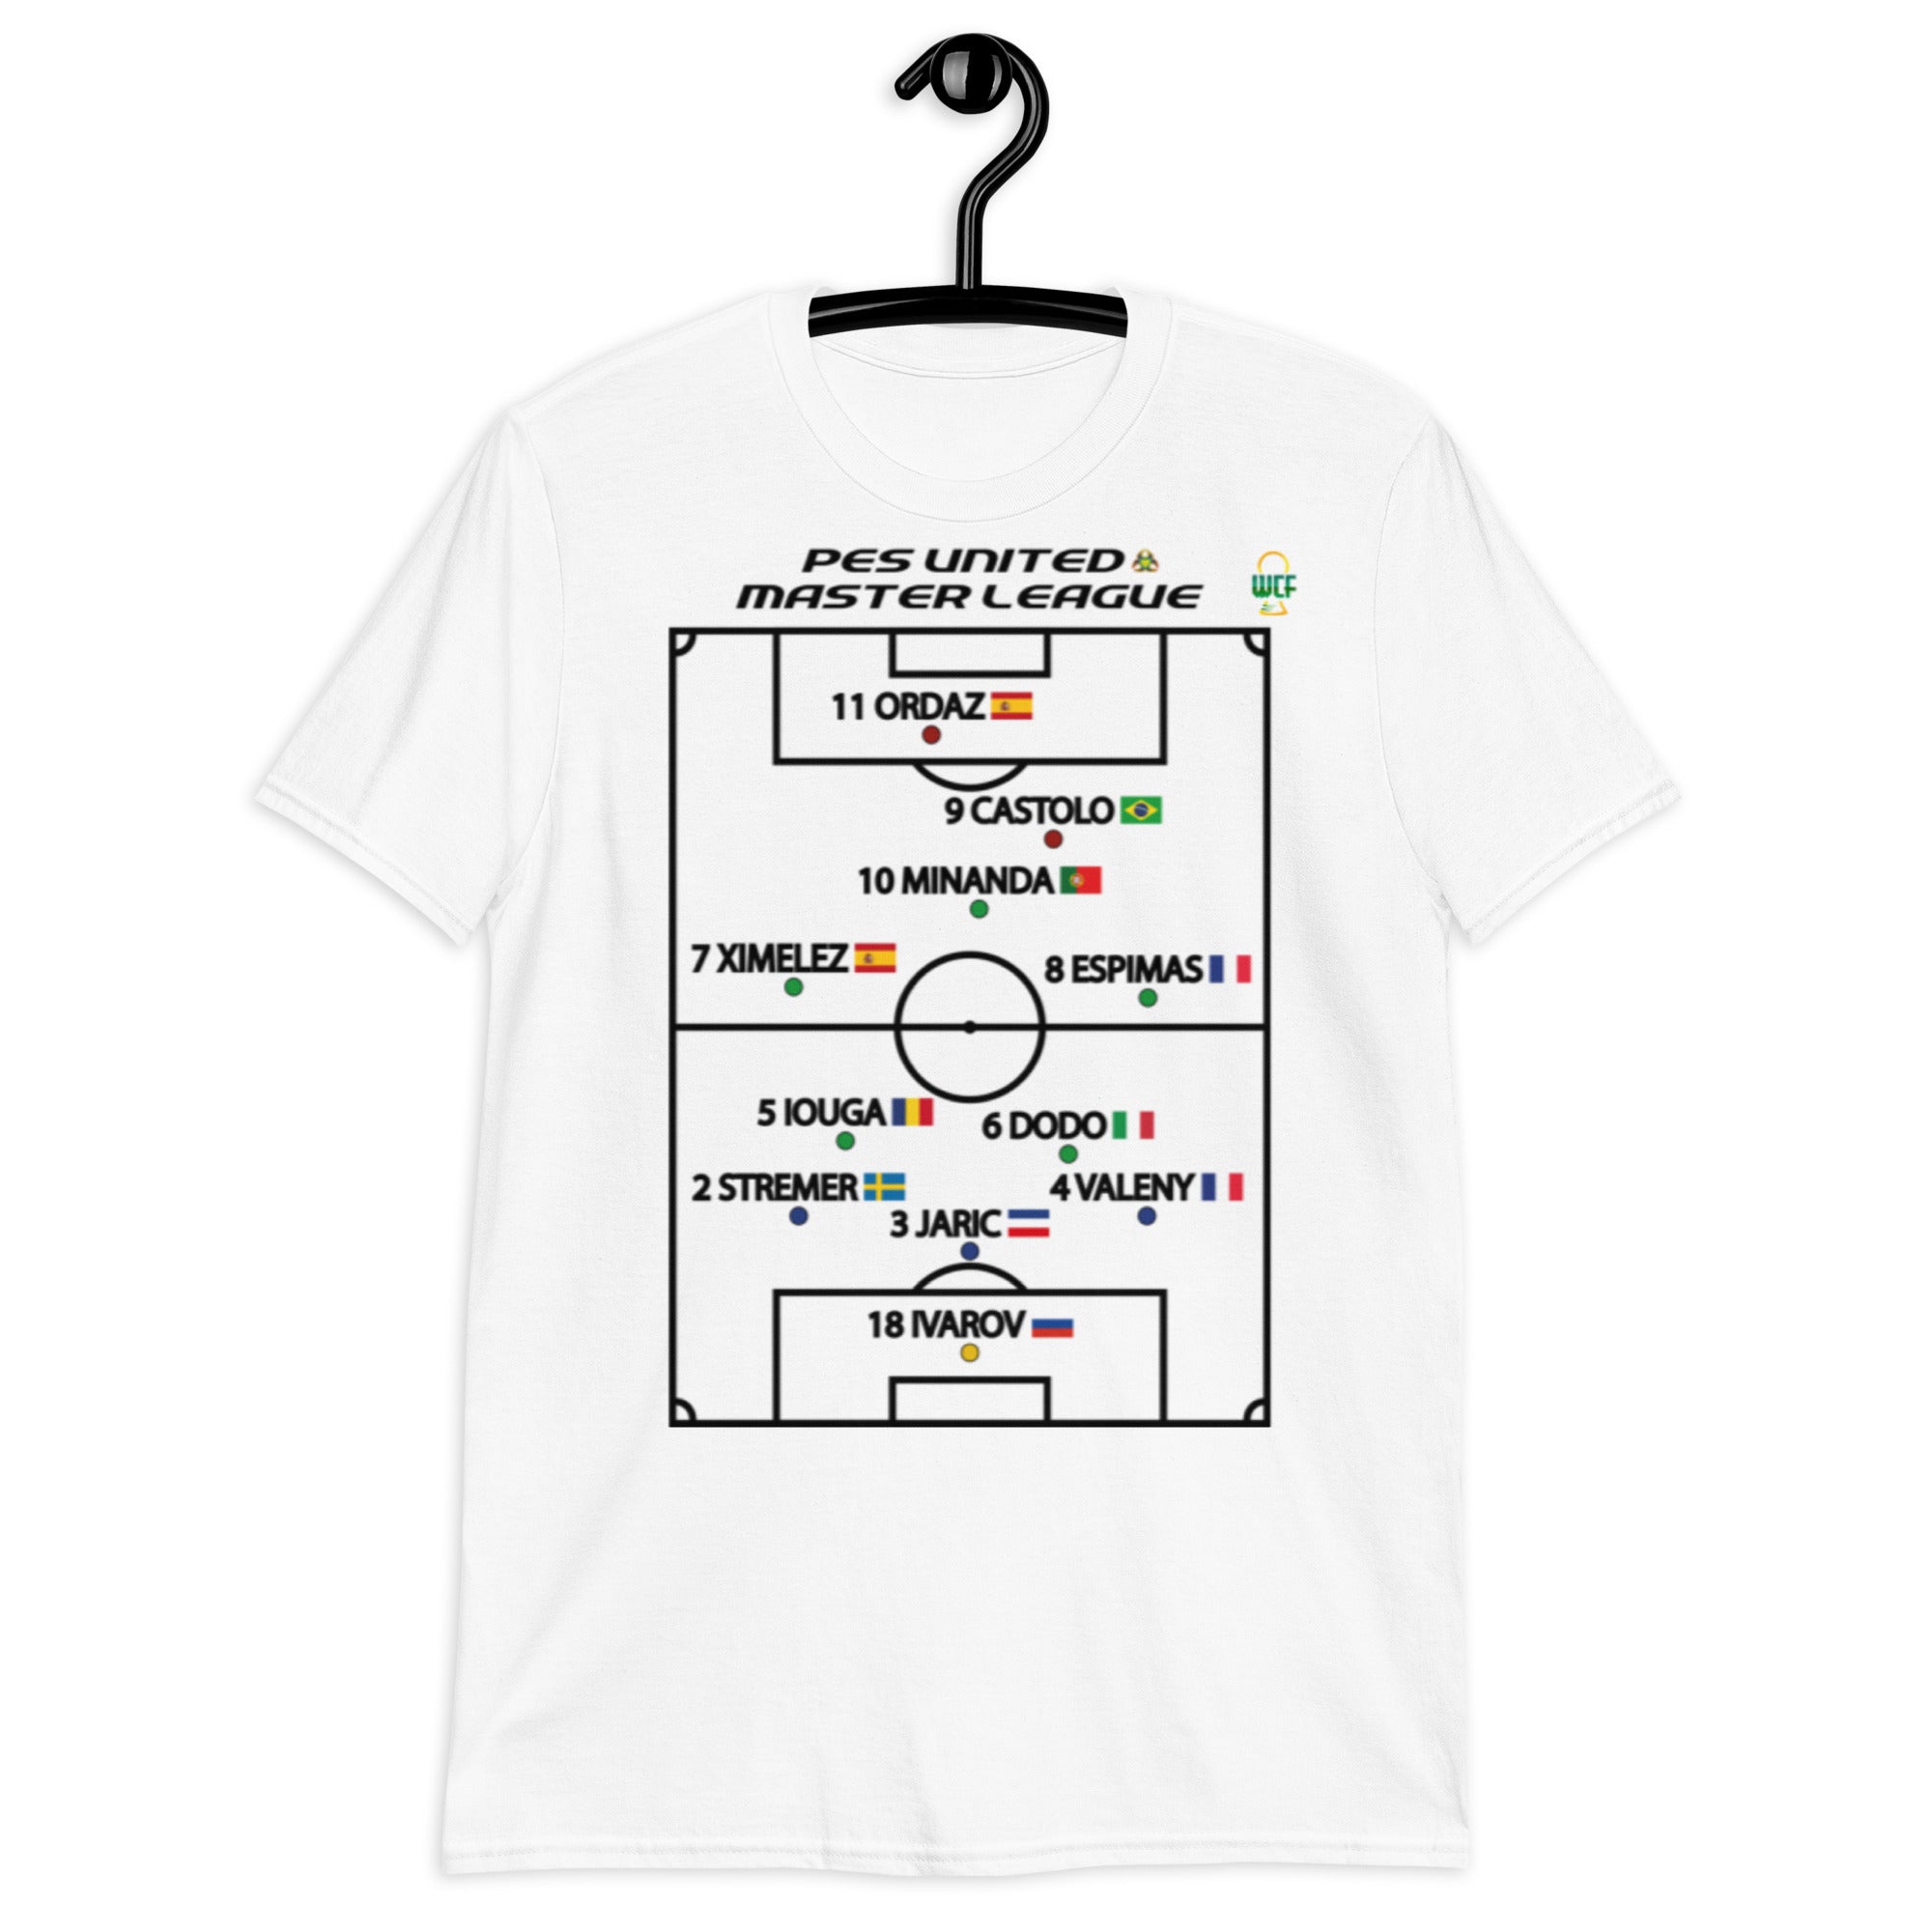 Pro Evolution Soccer Master League Lineup T-Shirt - PES United